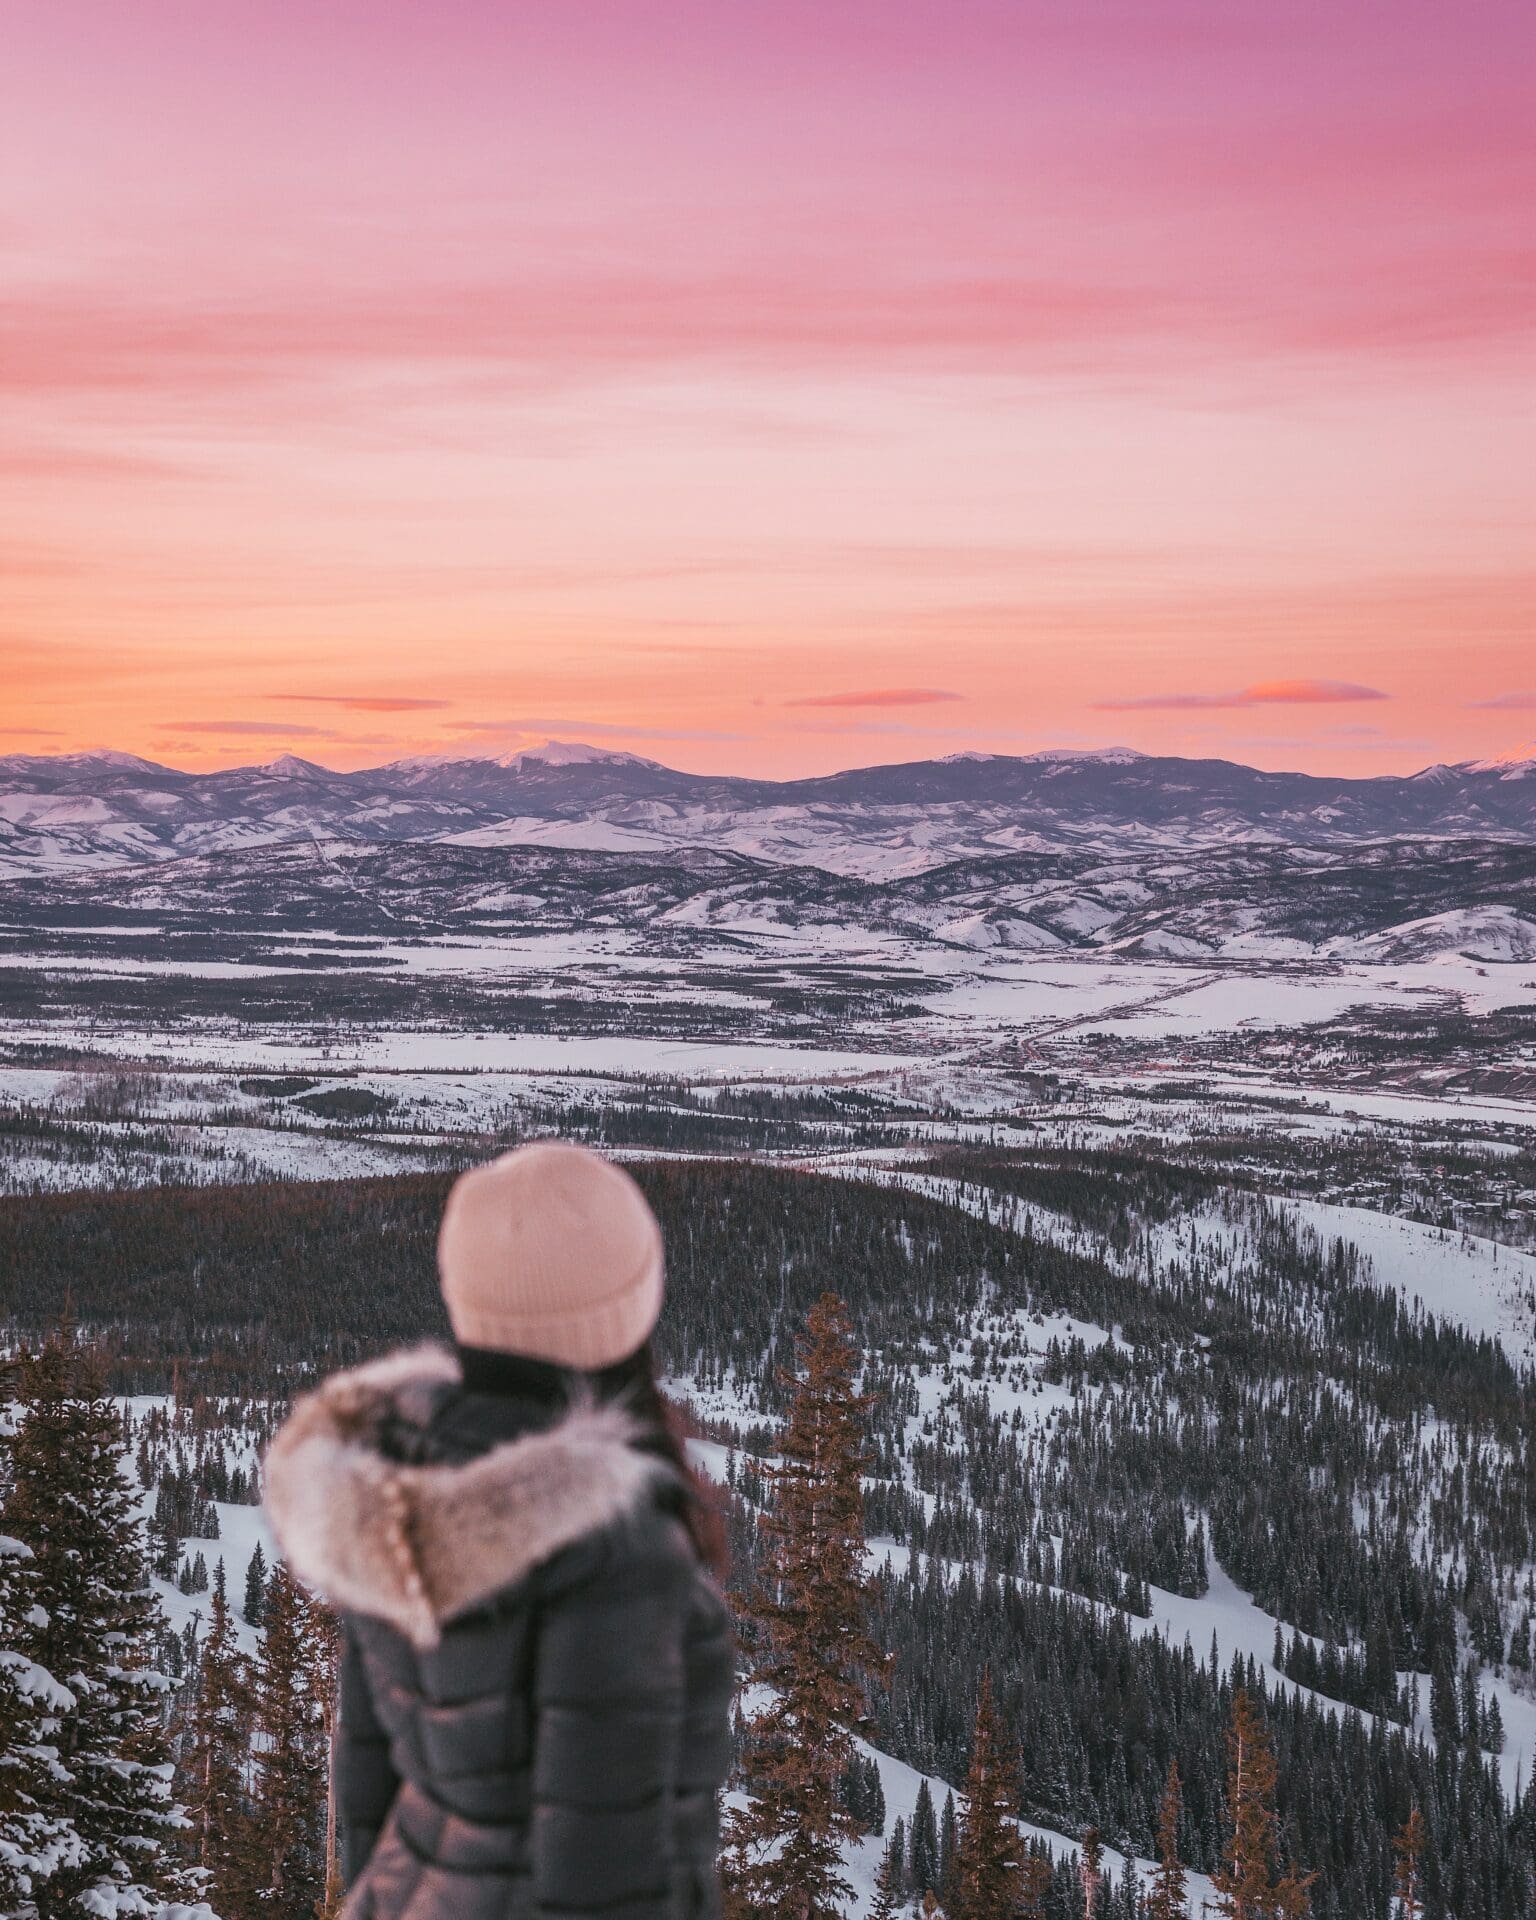 Winter Park ski resort at sunset